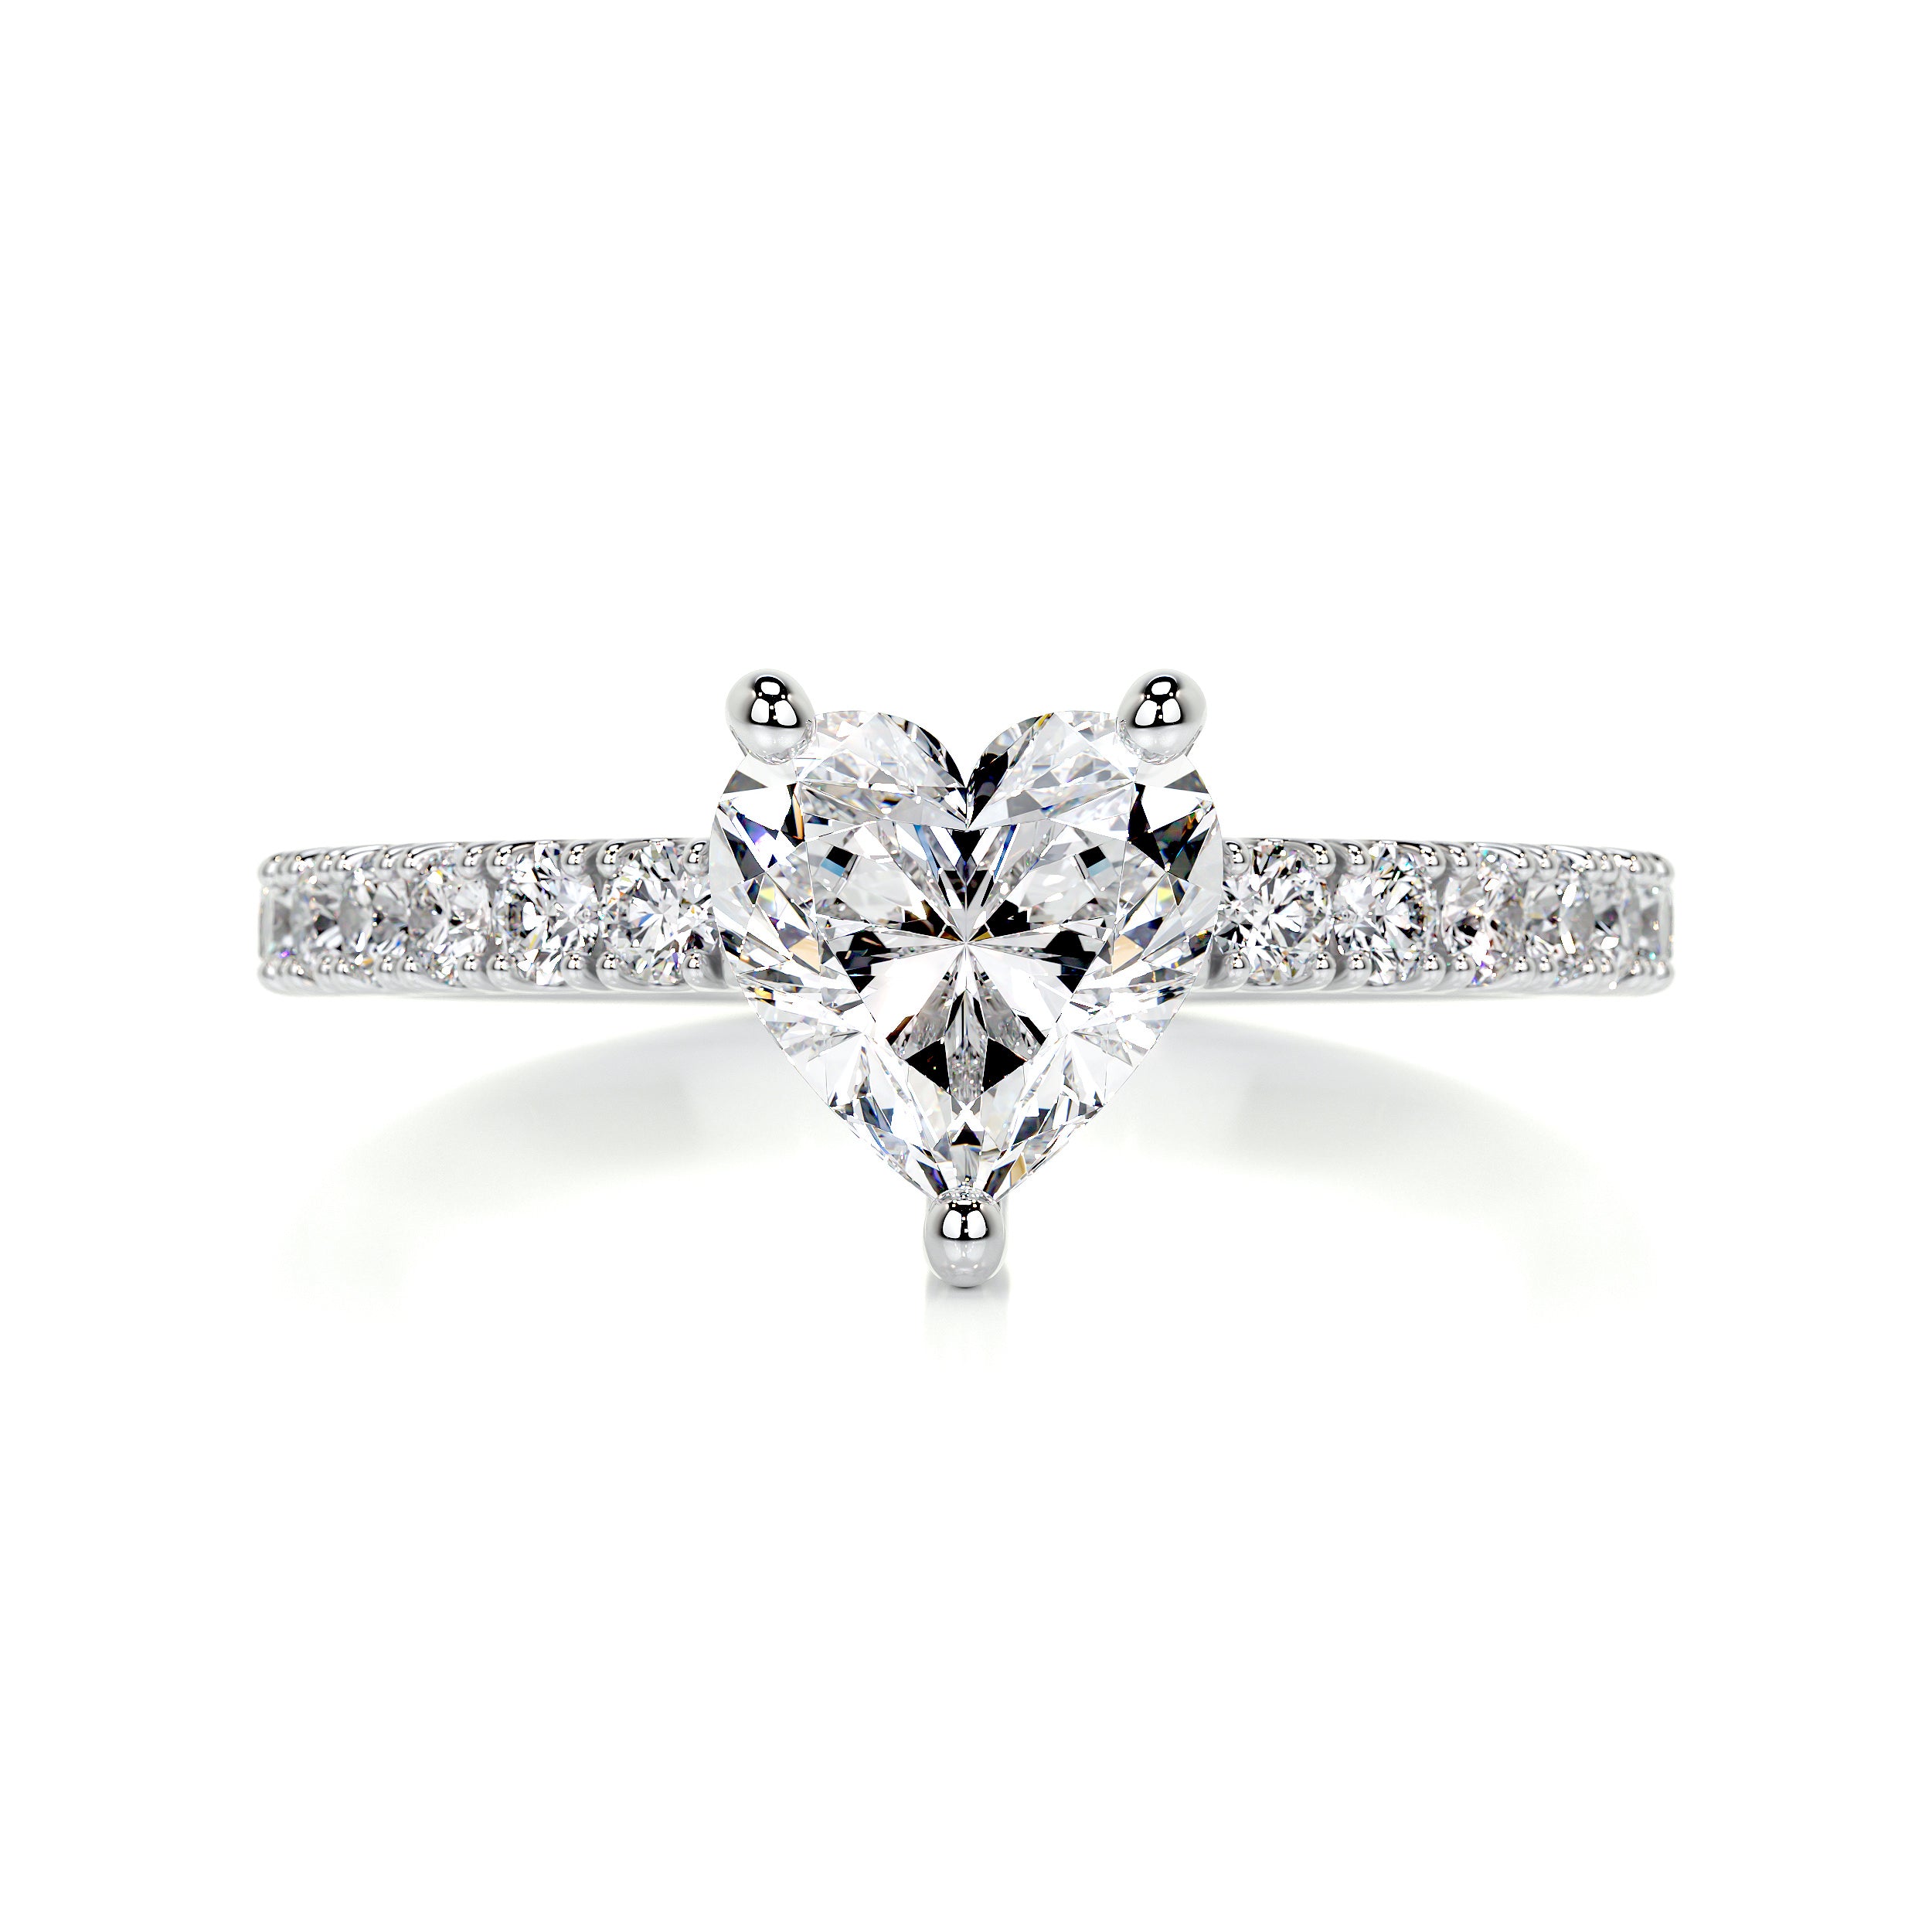 Audrey Diamond Engagement Ring   (1.3 Carat) -Platinum